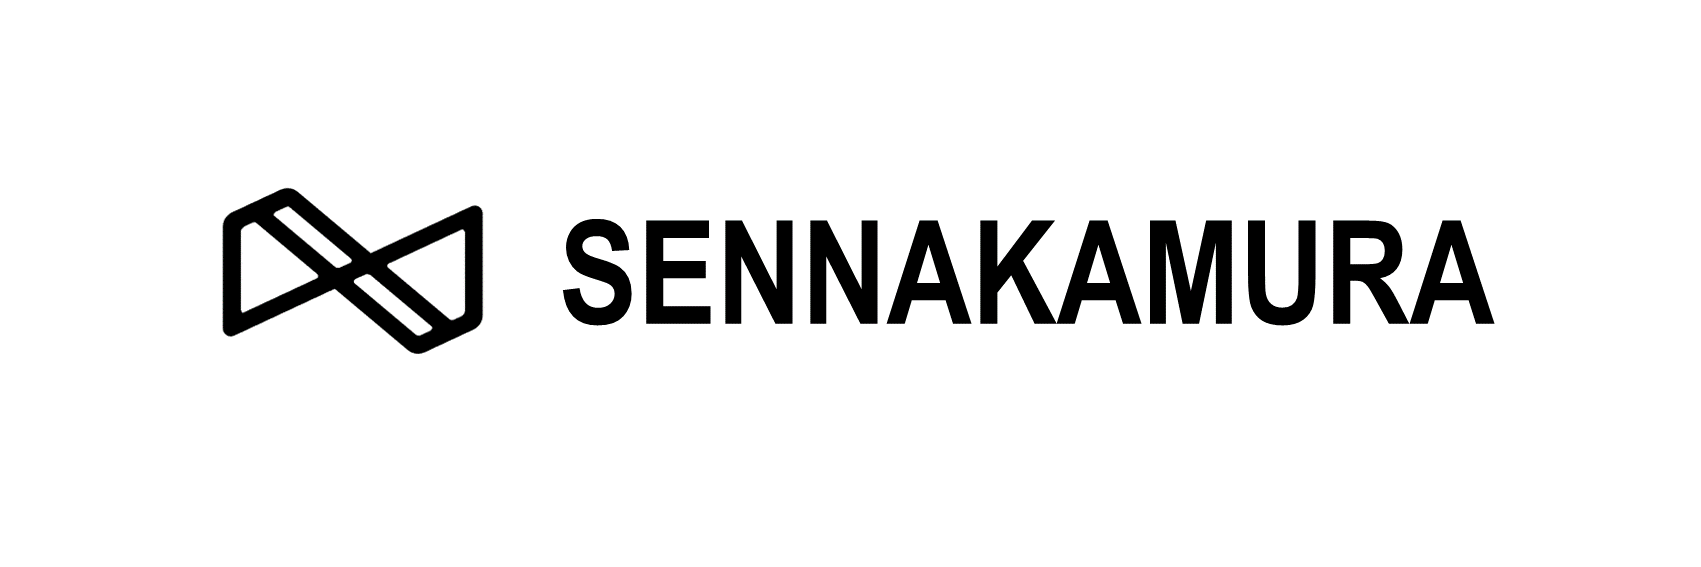 SENNAKAMURA